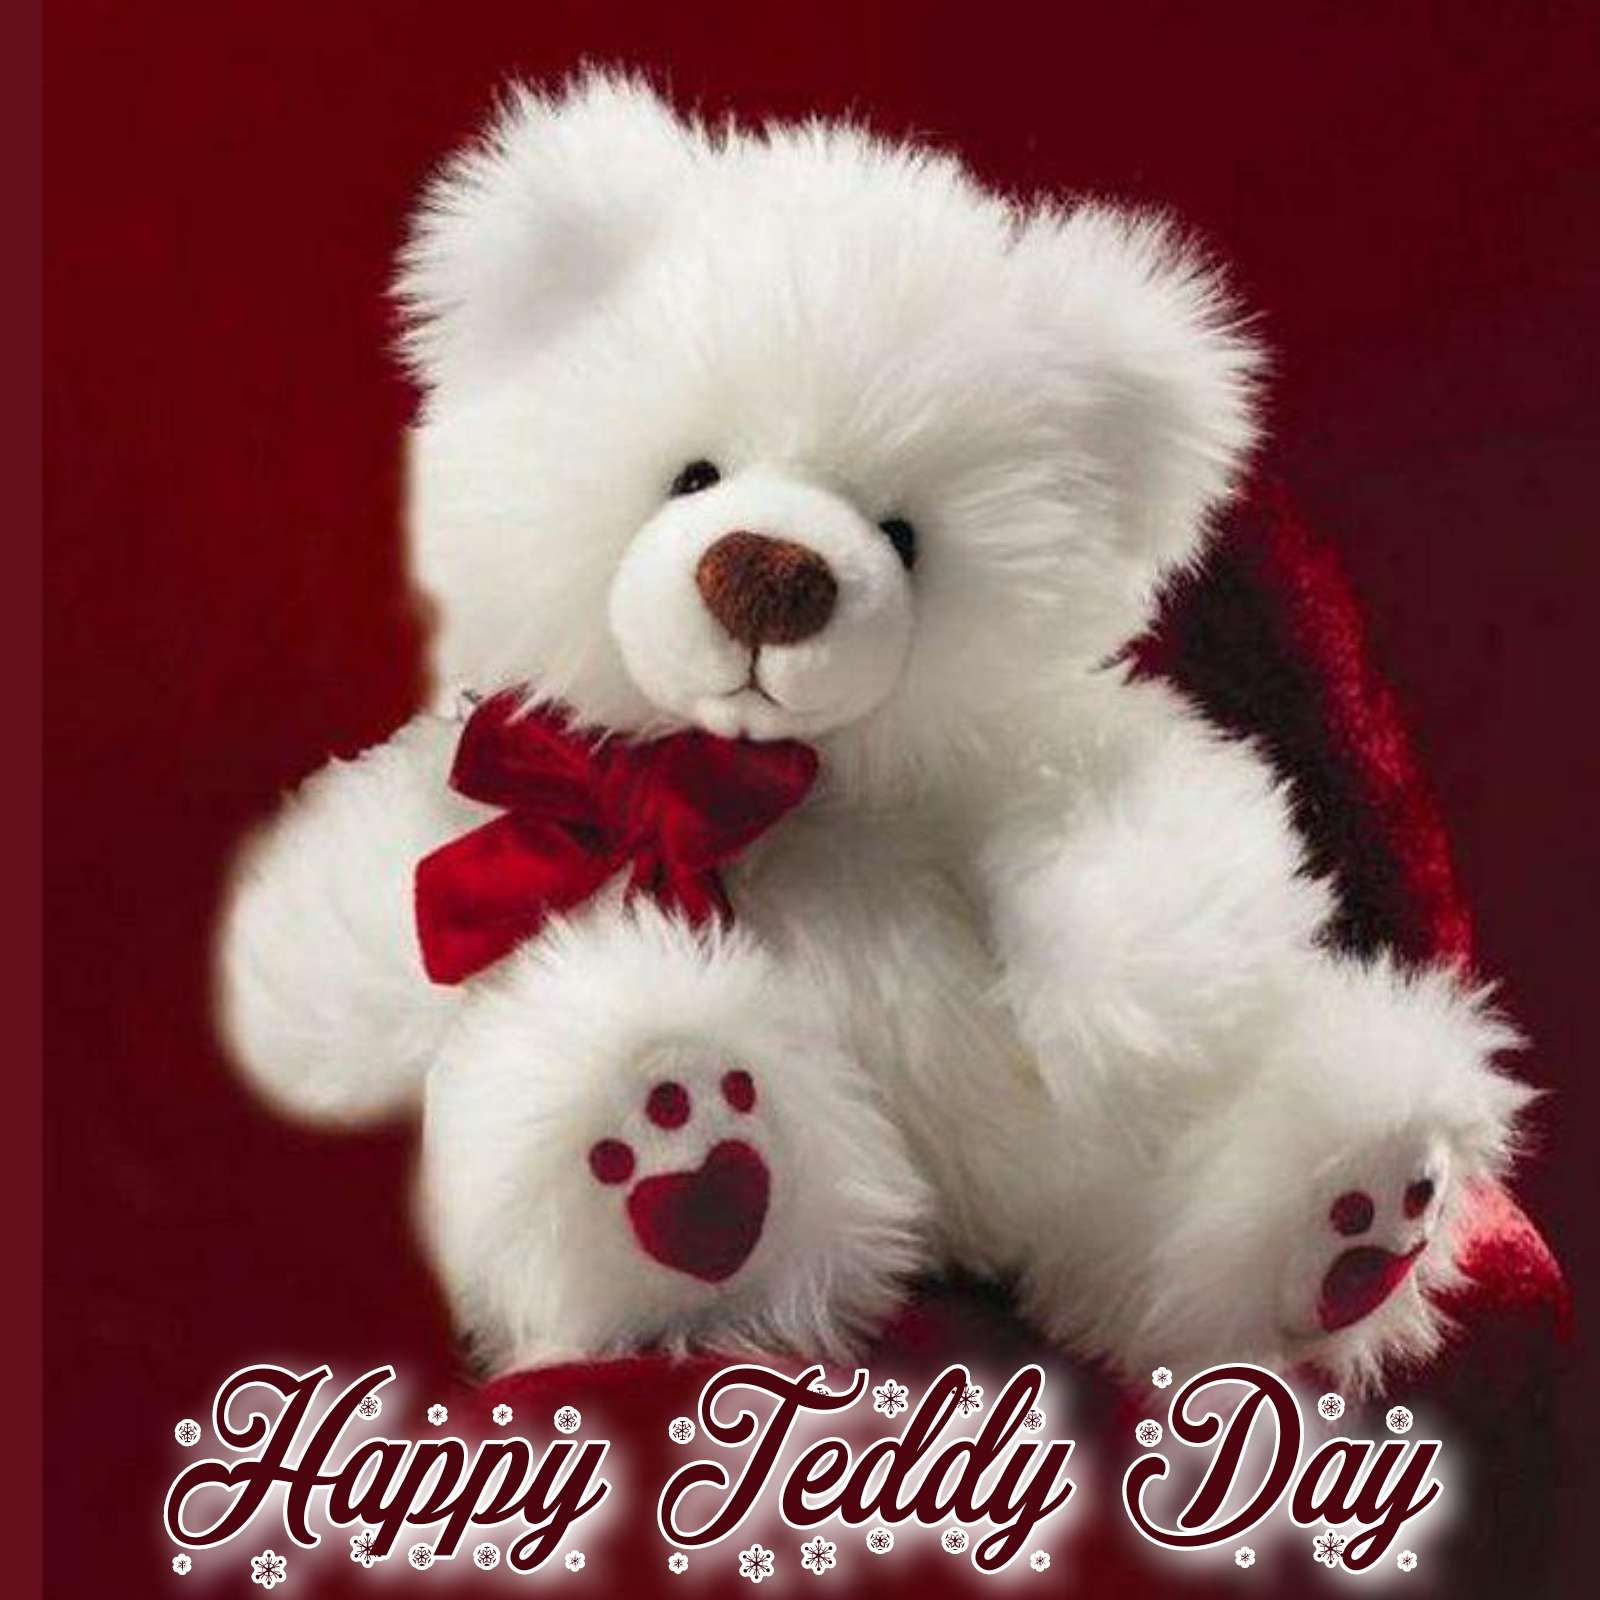 Happy Teddy Bear Day Photo Download